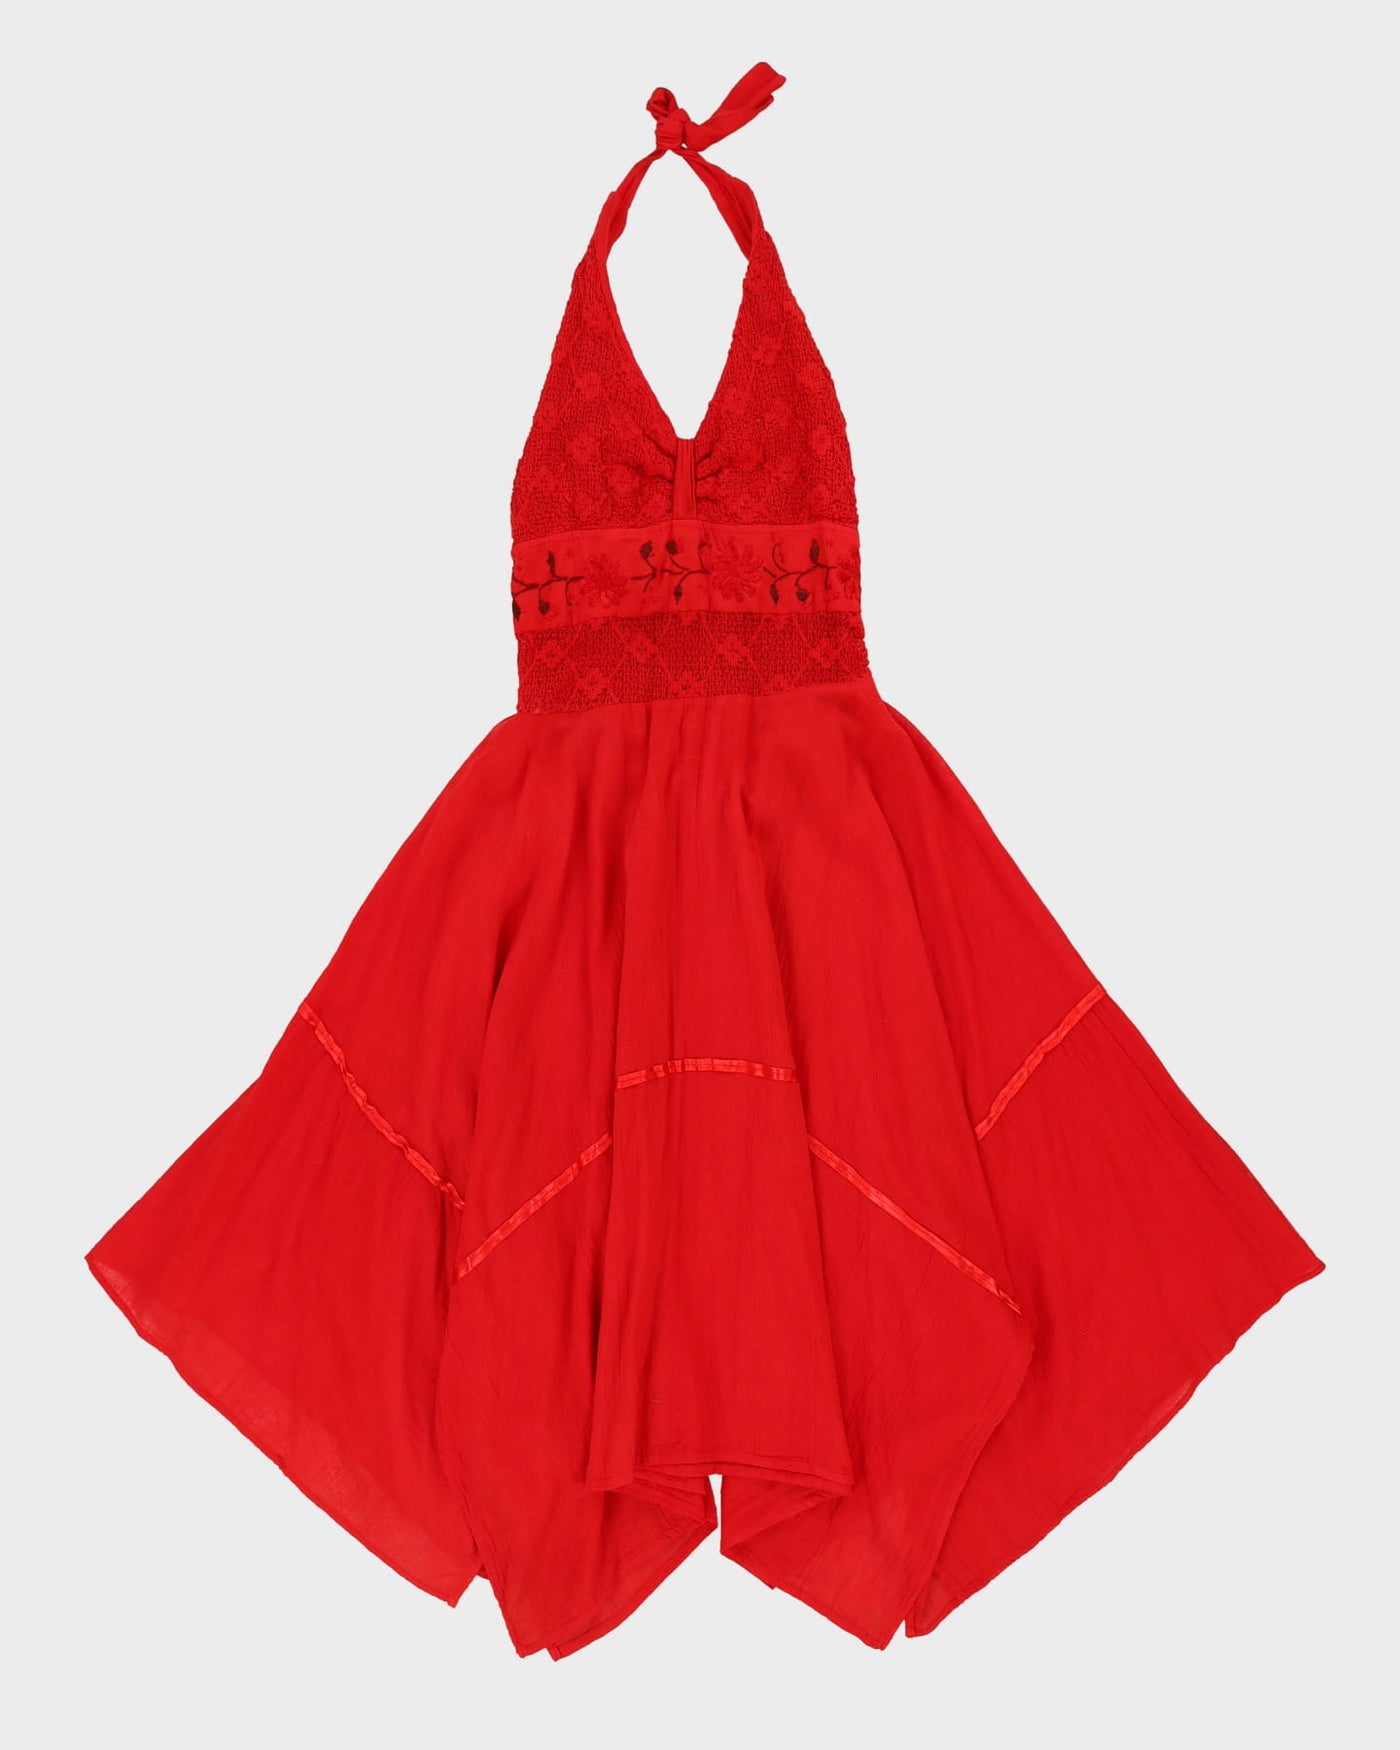 Red Embroidered Halter Neck Dress - S